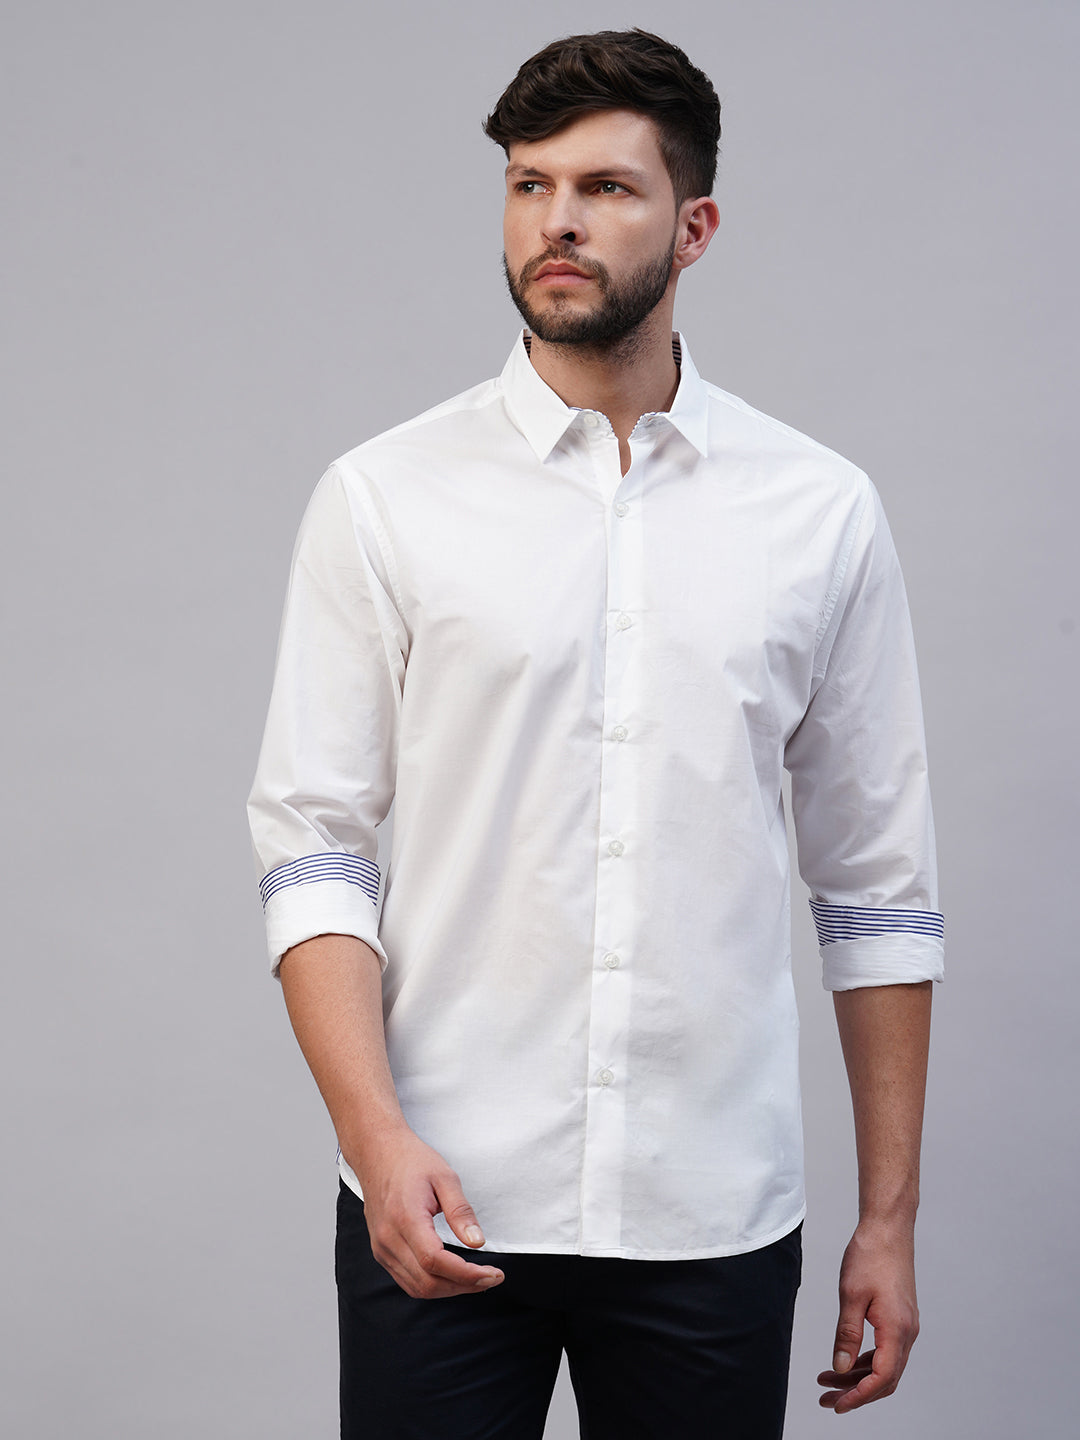 Men's White Cotton Slim Fit shirt